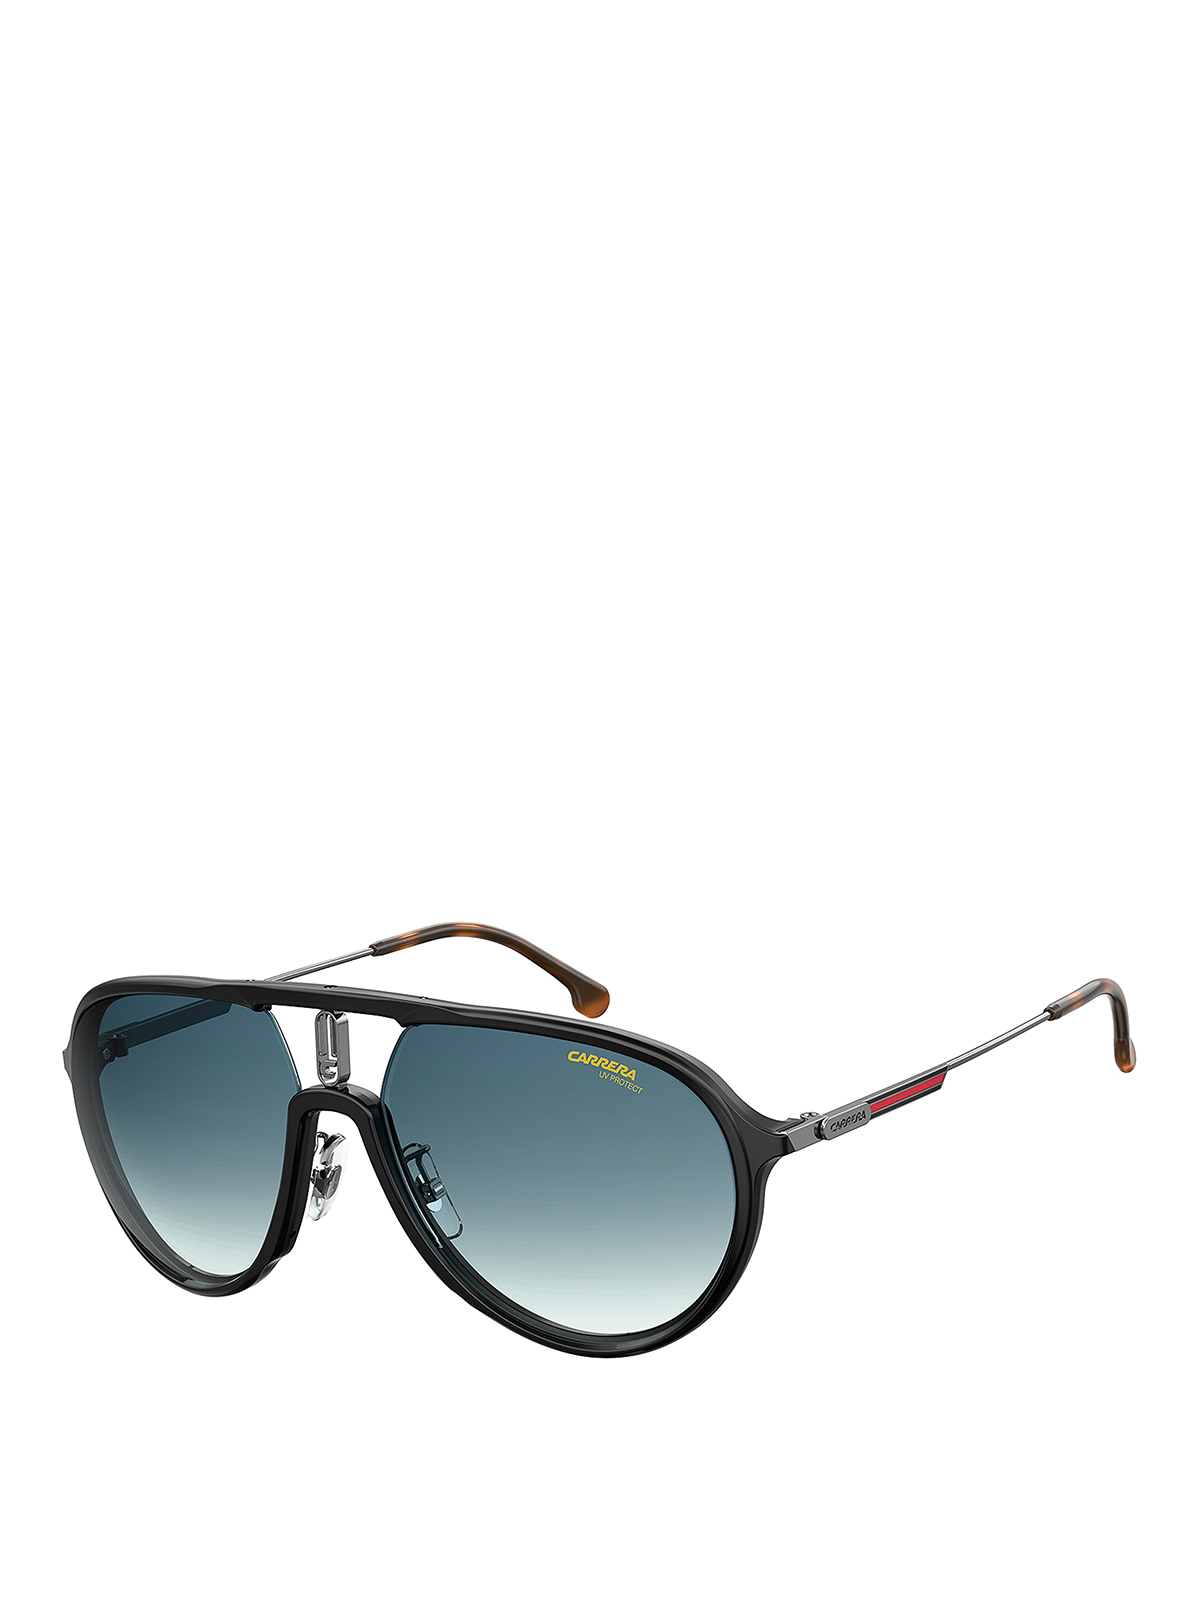 Sunglasses Carrera - Aviator full-frame sunglasses - CARRERA1026S28408